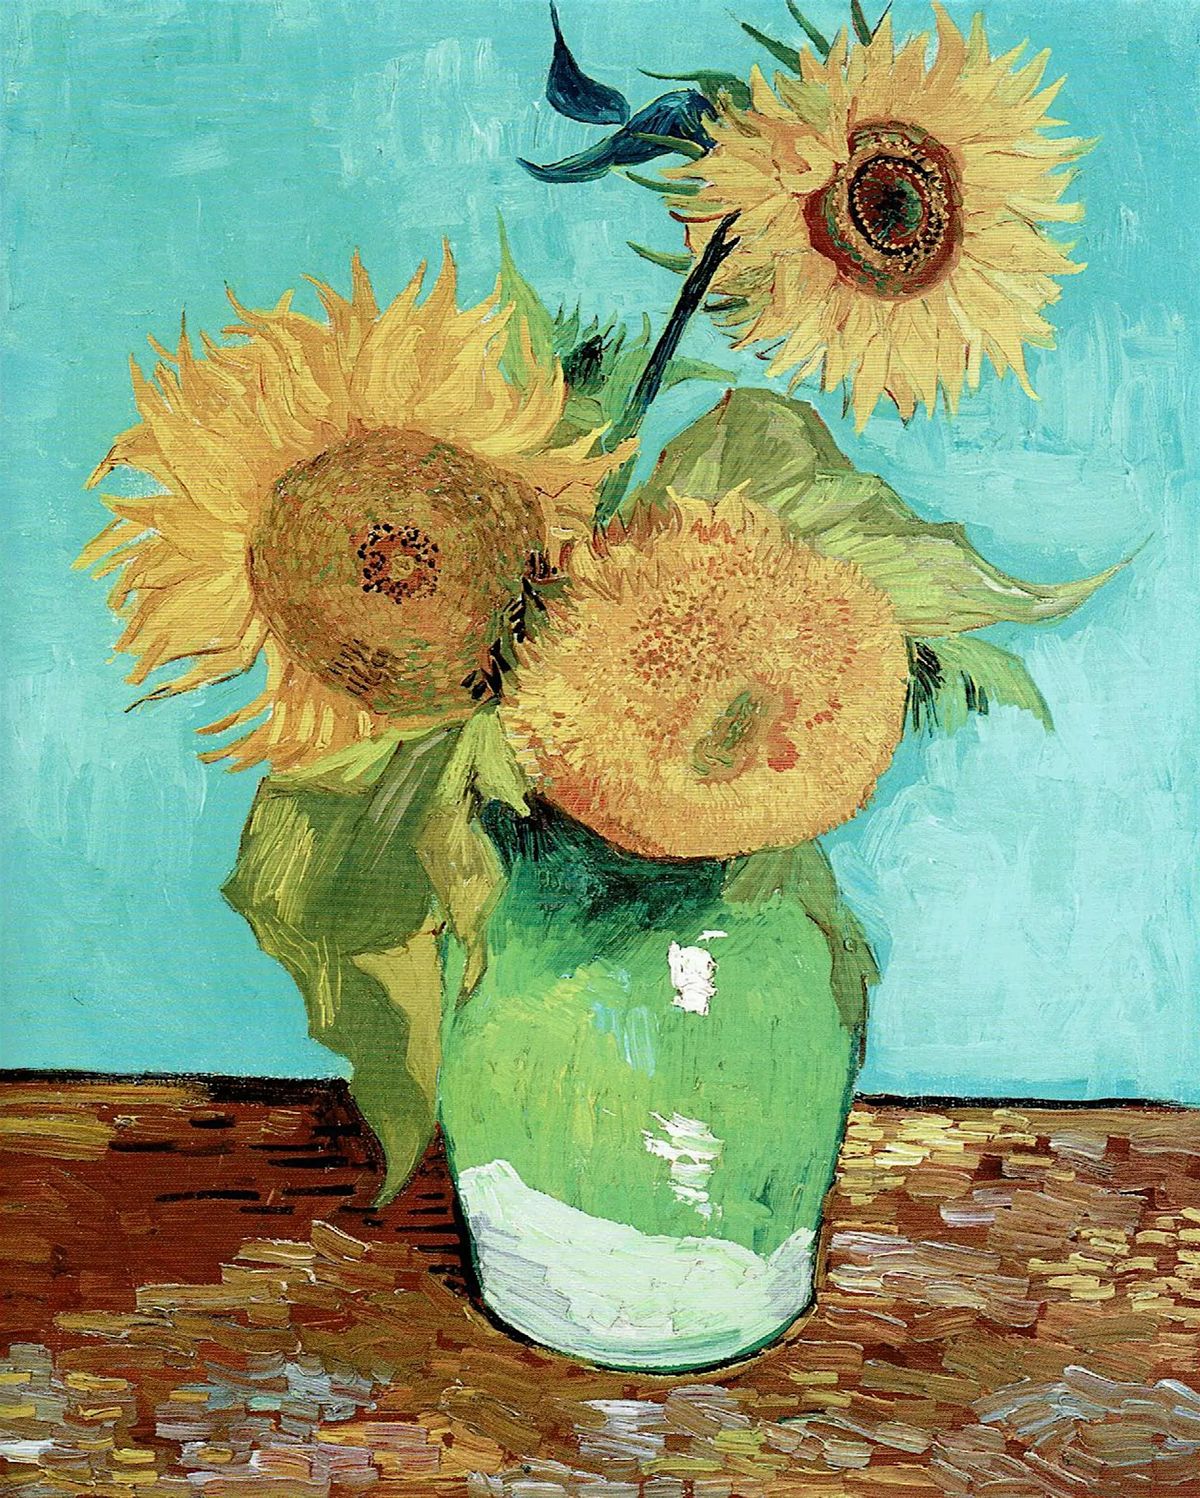 Impressionist Painting Workshop: Van Gogh's Sunflower